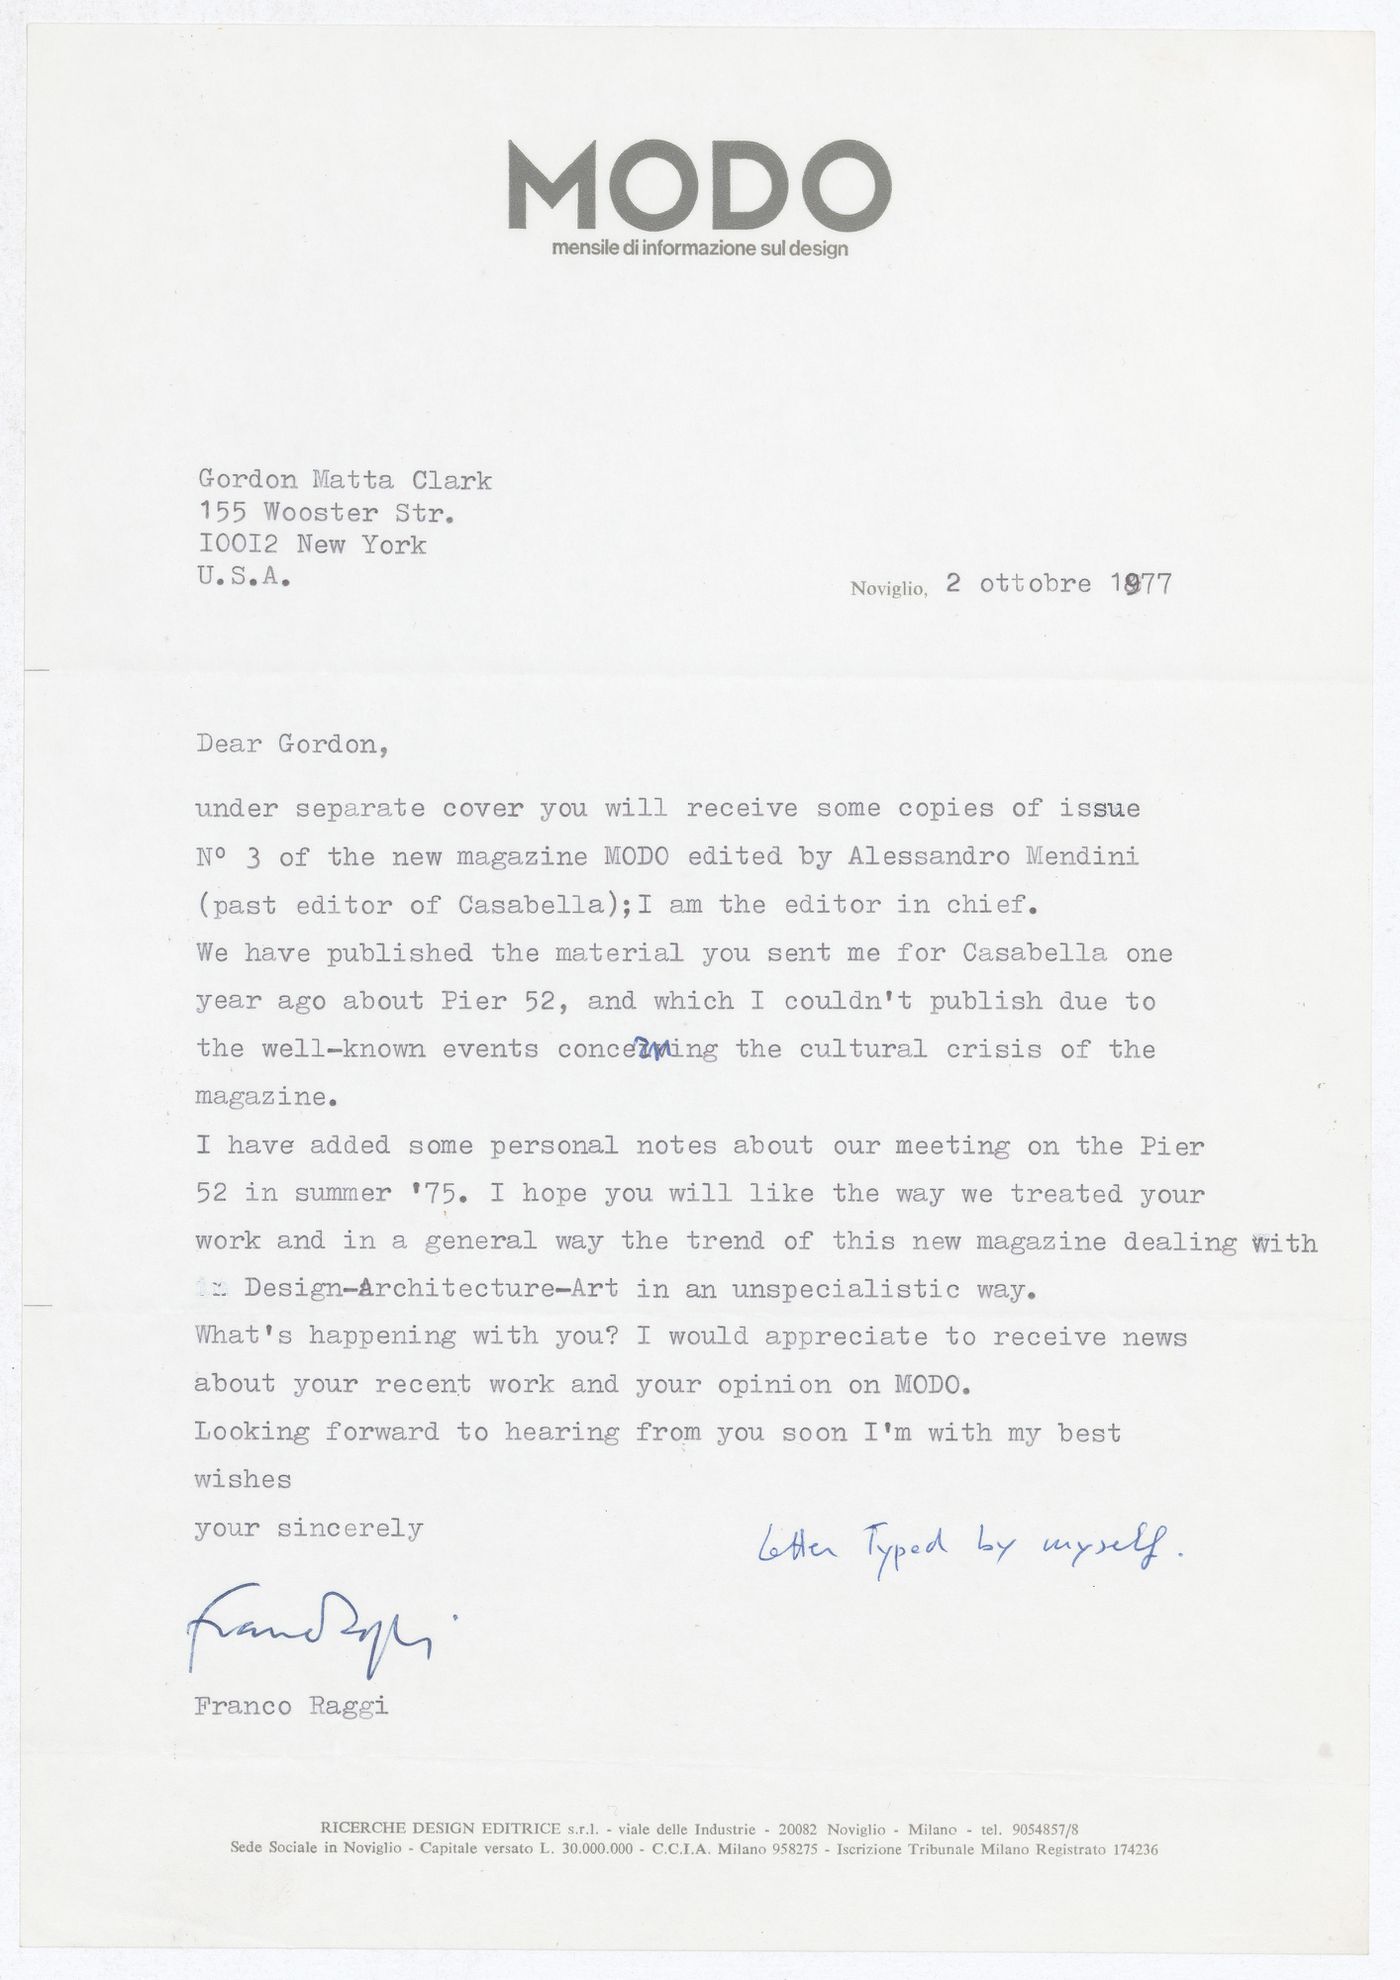 Letter from Franco Raggi to Gordon Matta-Clark